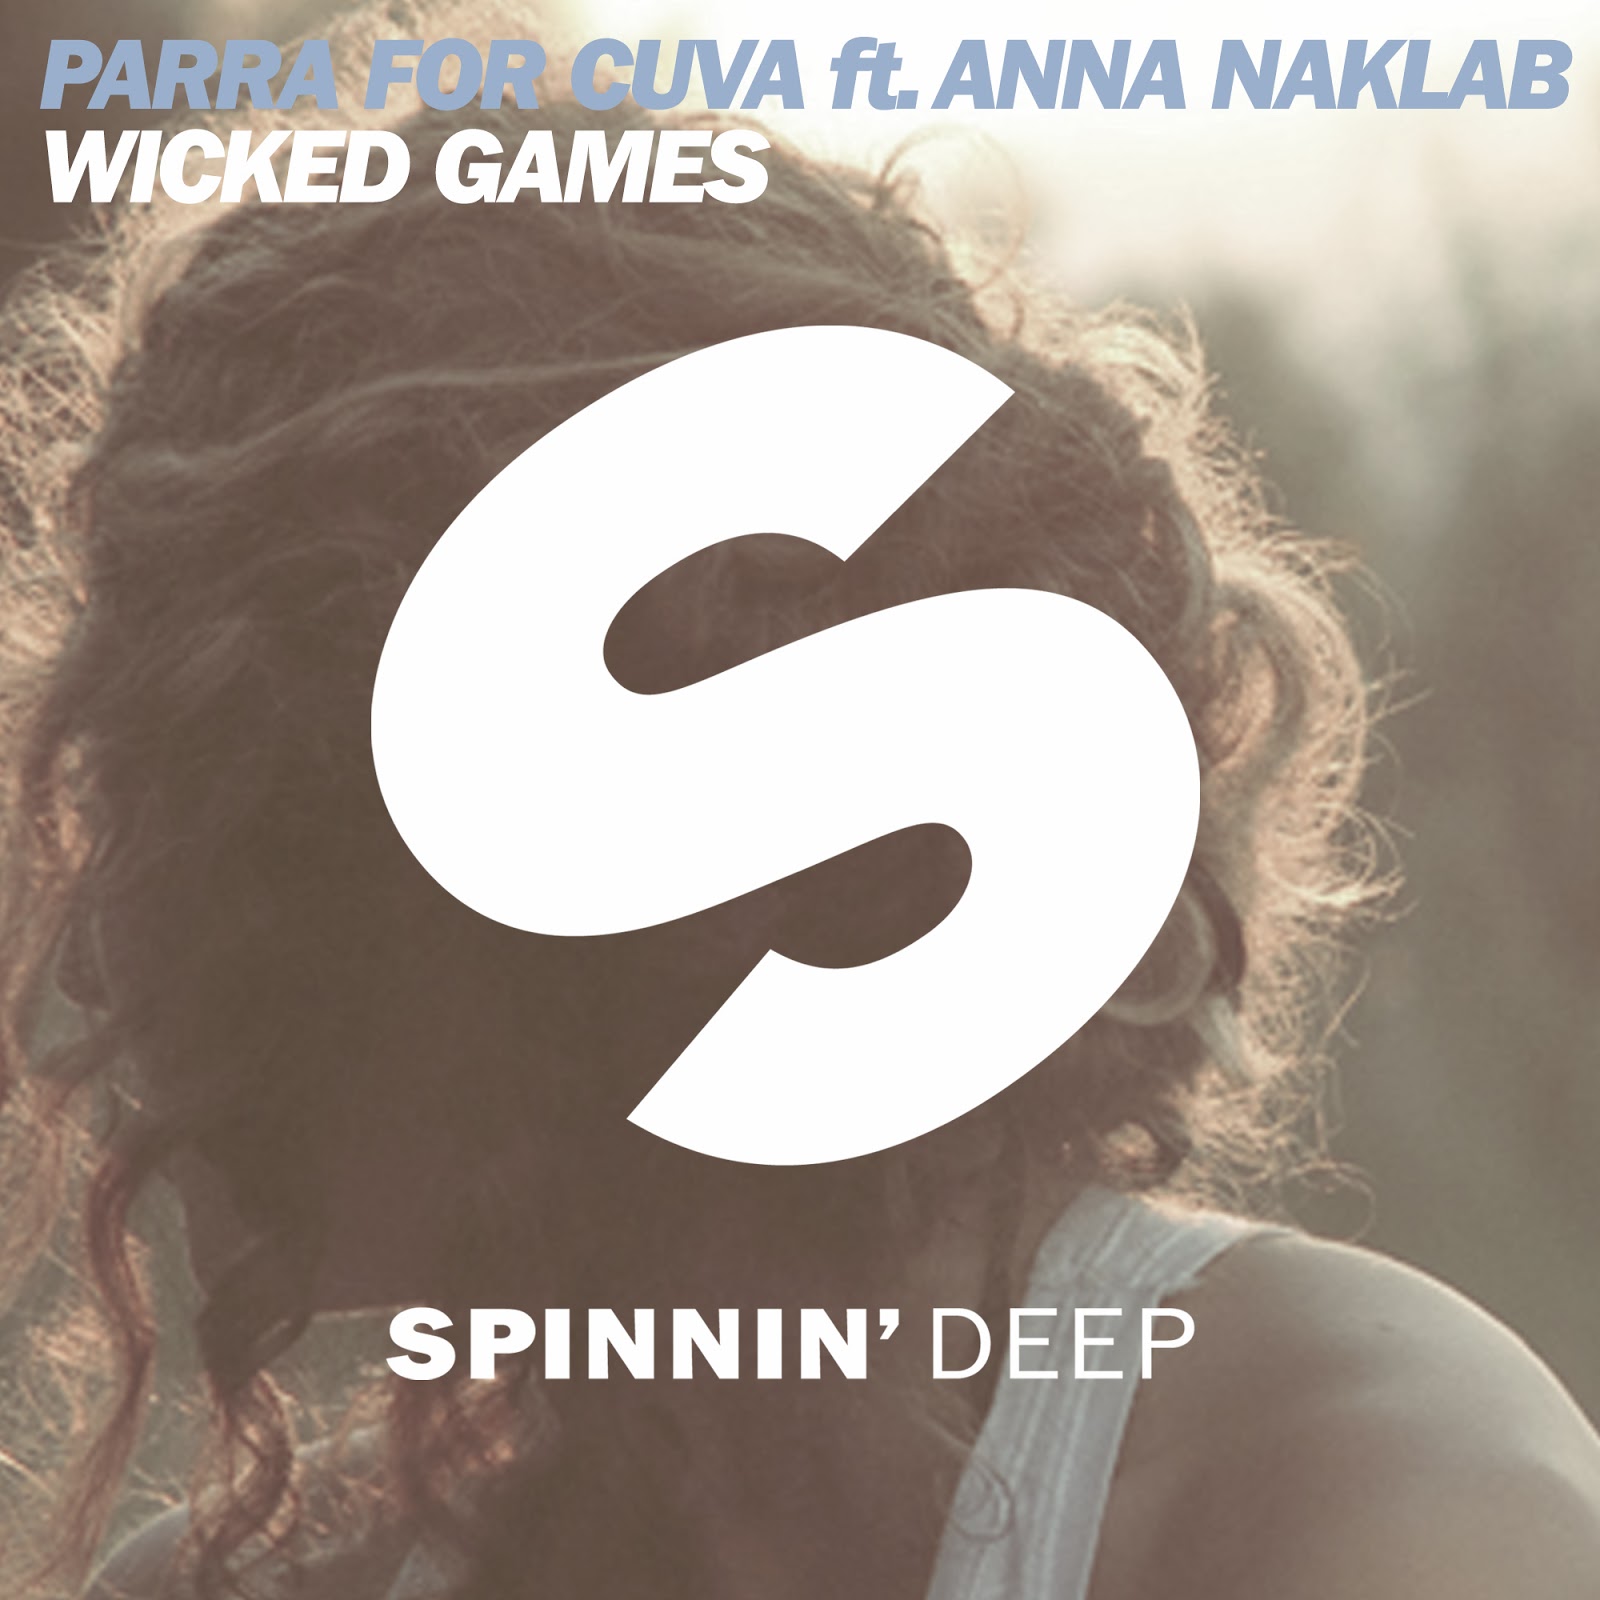 Go cuva ru. Parra for Cuva Wicked games. Anna Naklab. Anna Naklab фото. Parra for Cuva feat. Anna Naklab - Wicked games (Radio Edit).